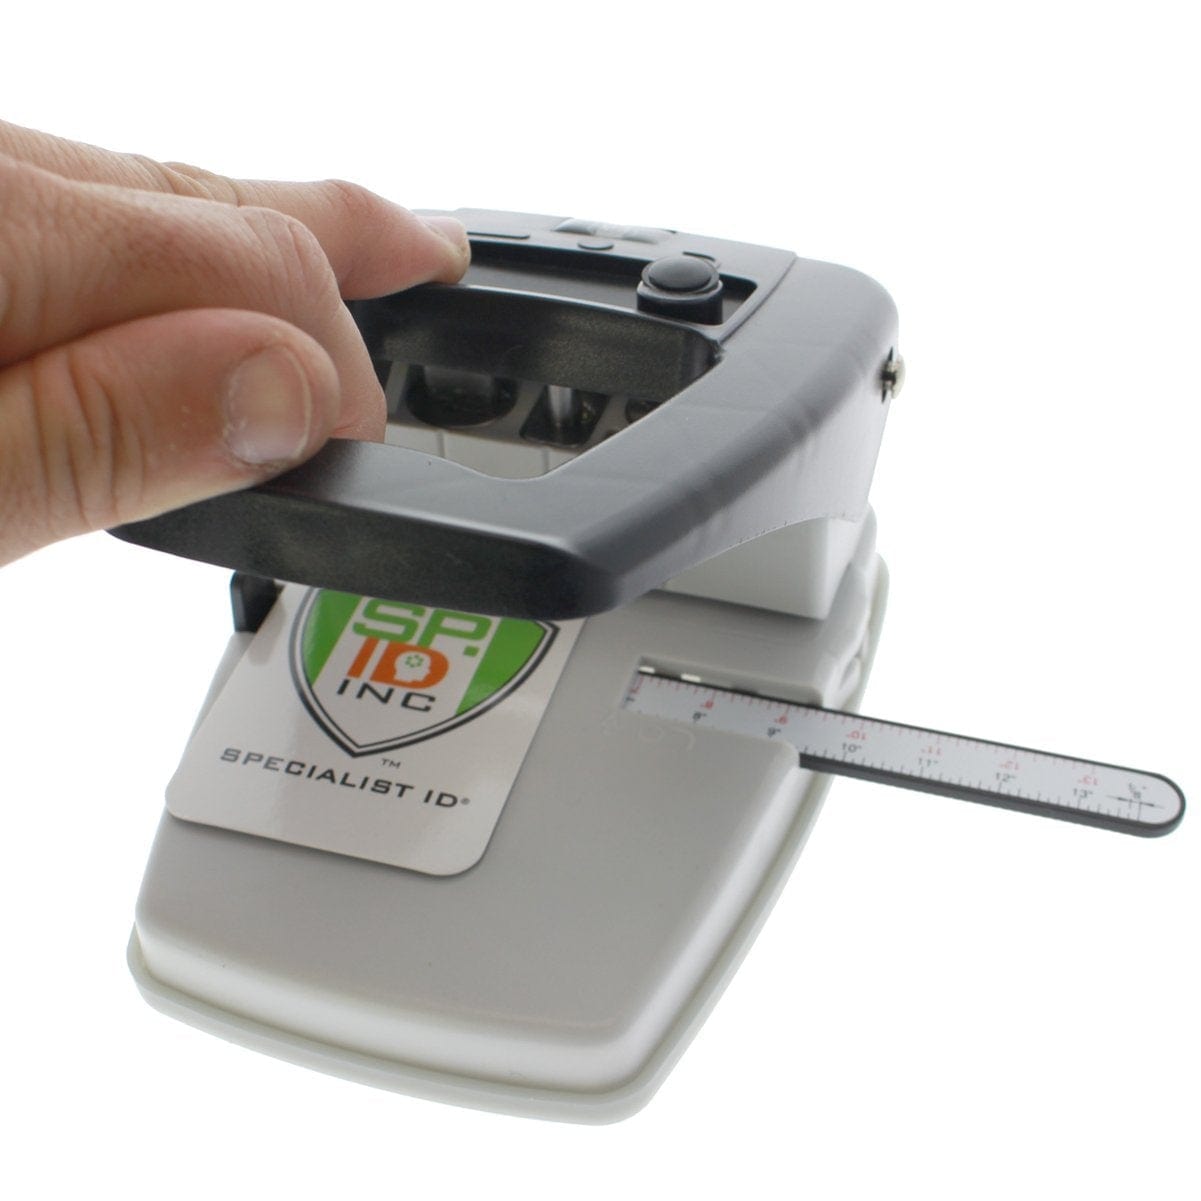 Slot-ETG 3-in1 ID Card Slot Punch Order Online Now. Photo ID Slot Punches,  Electric Slot Punches and More. –